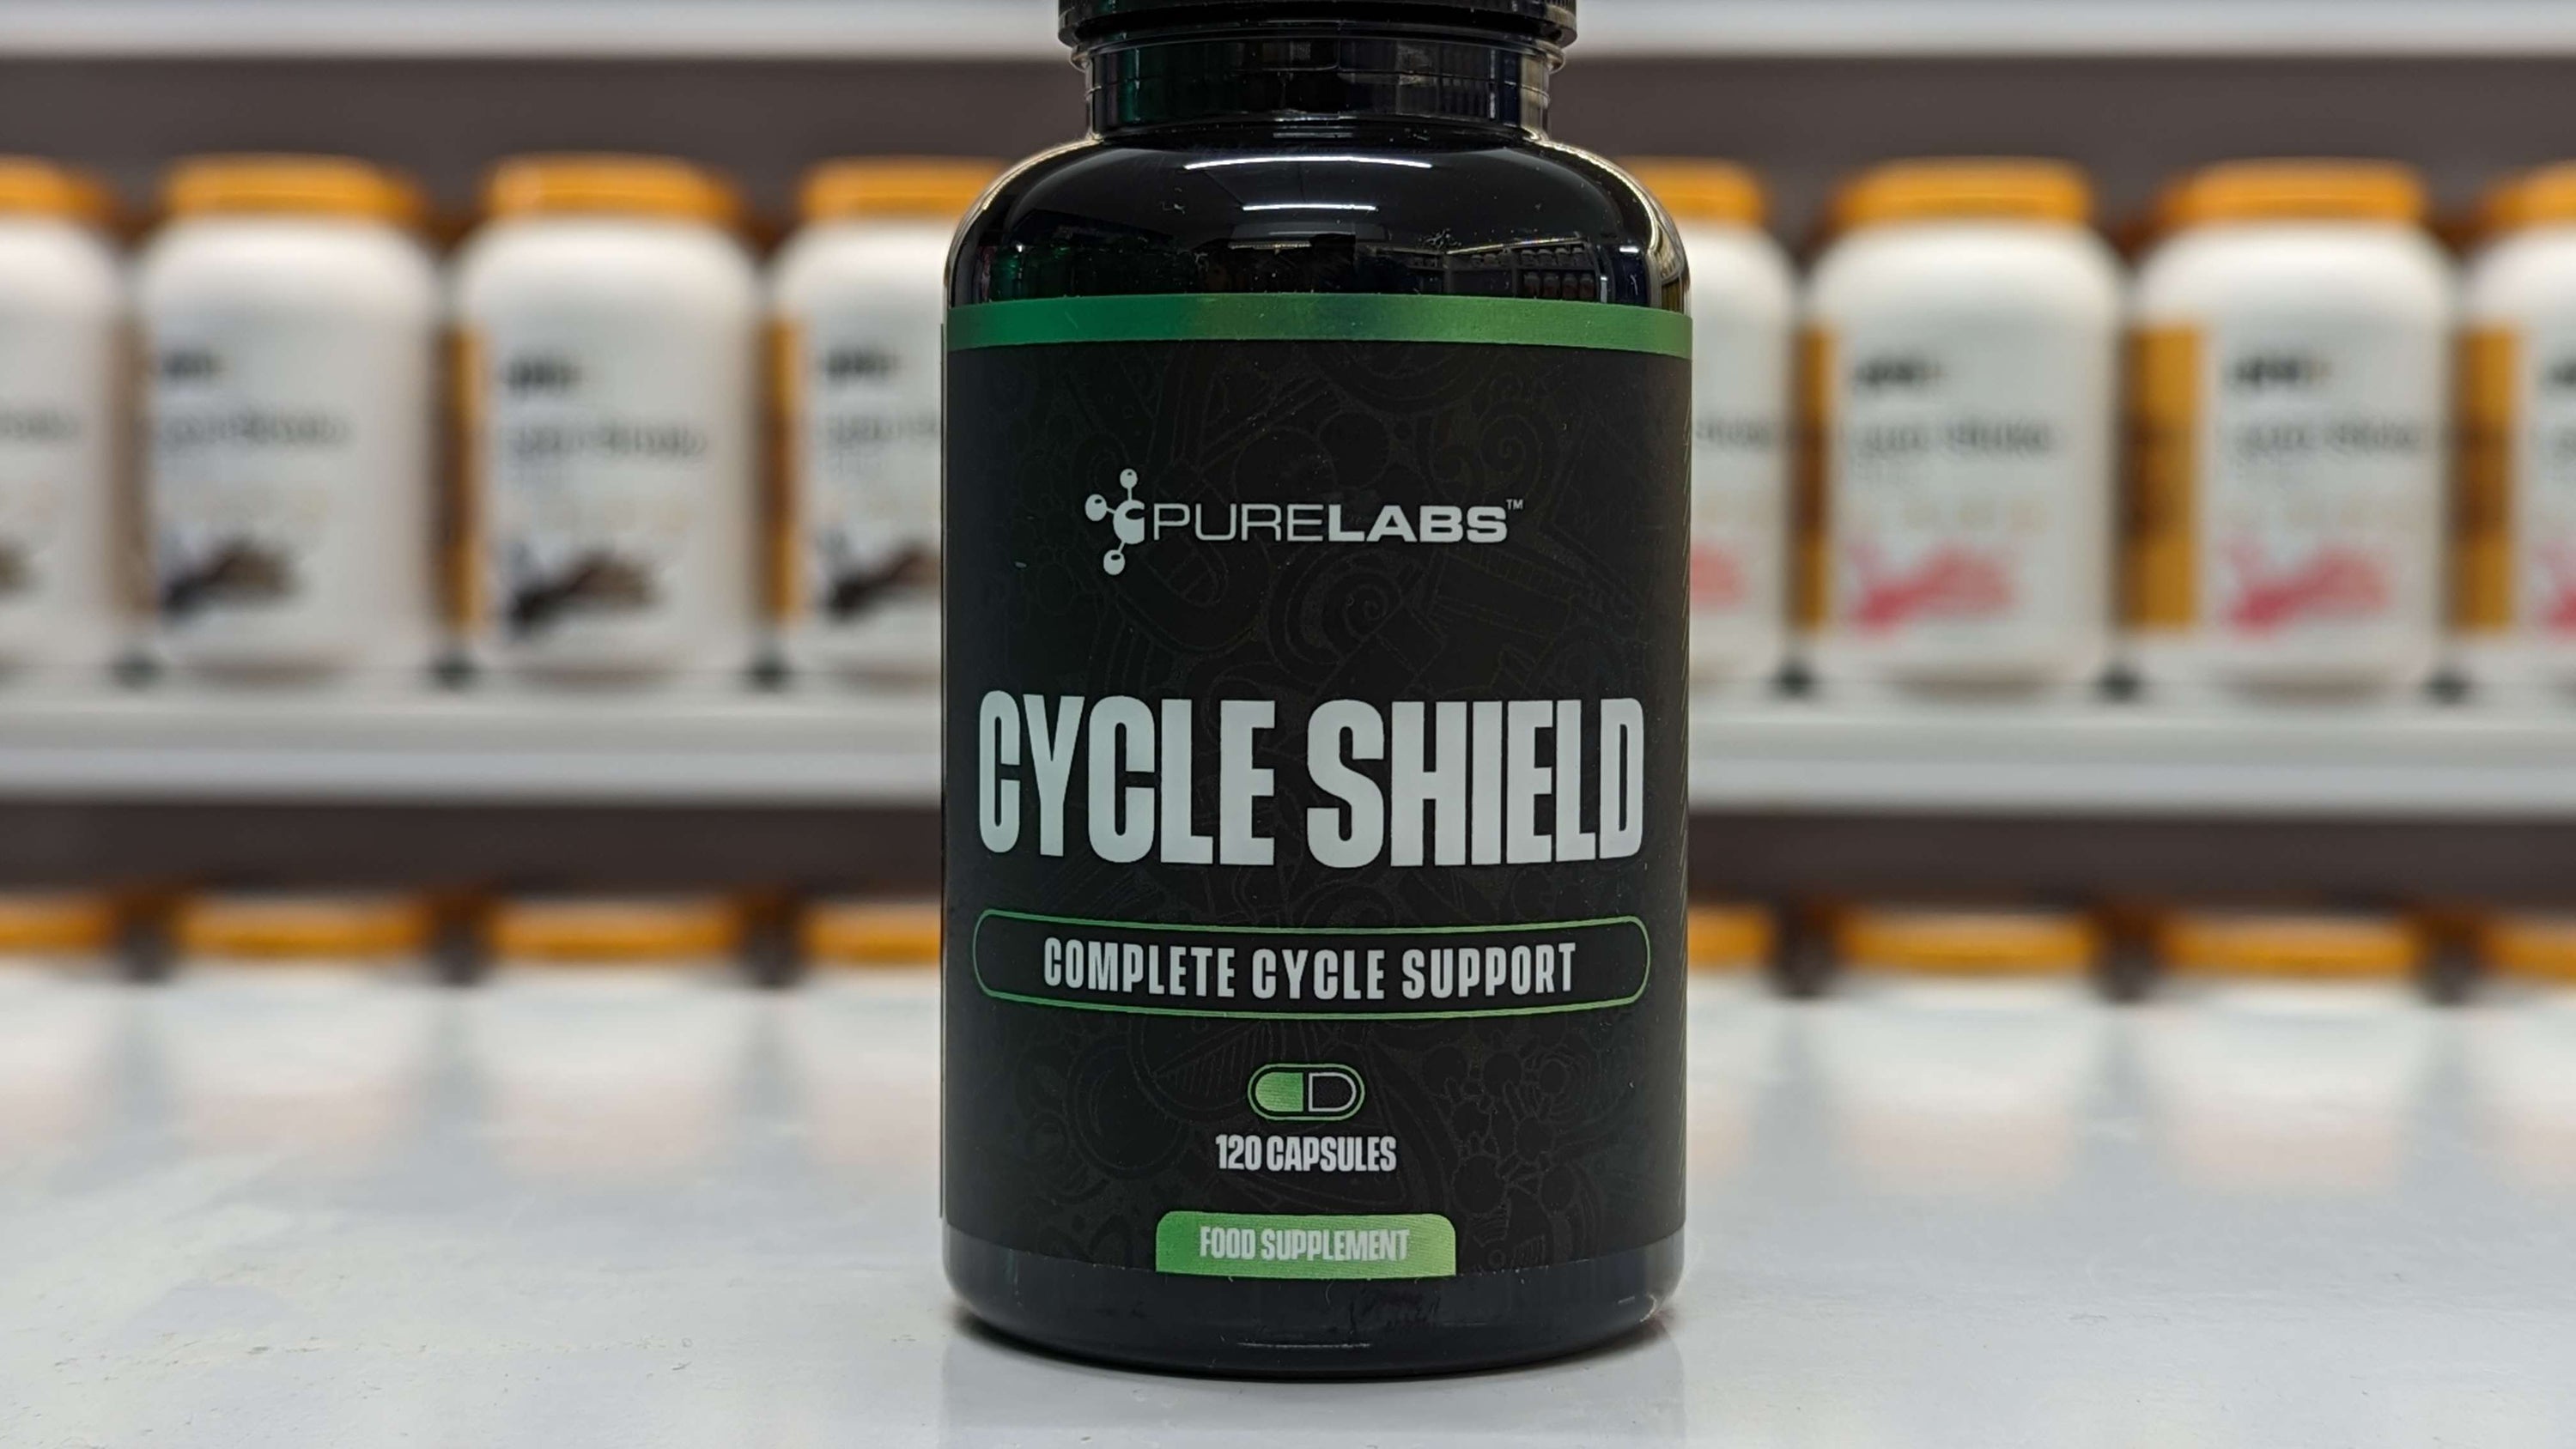 Cycle Shield